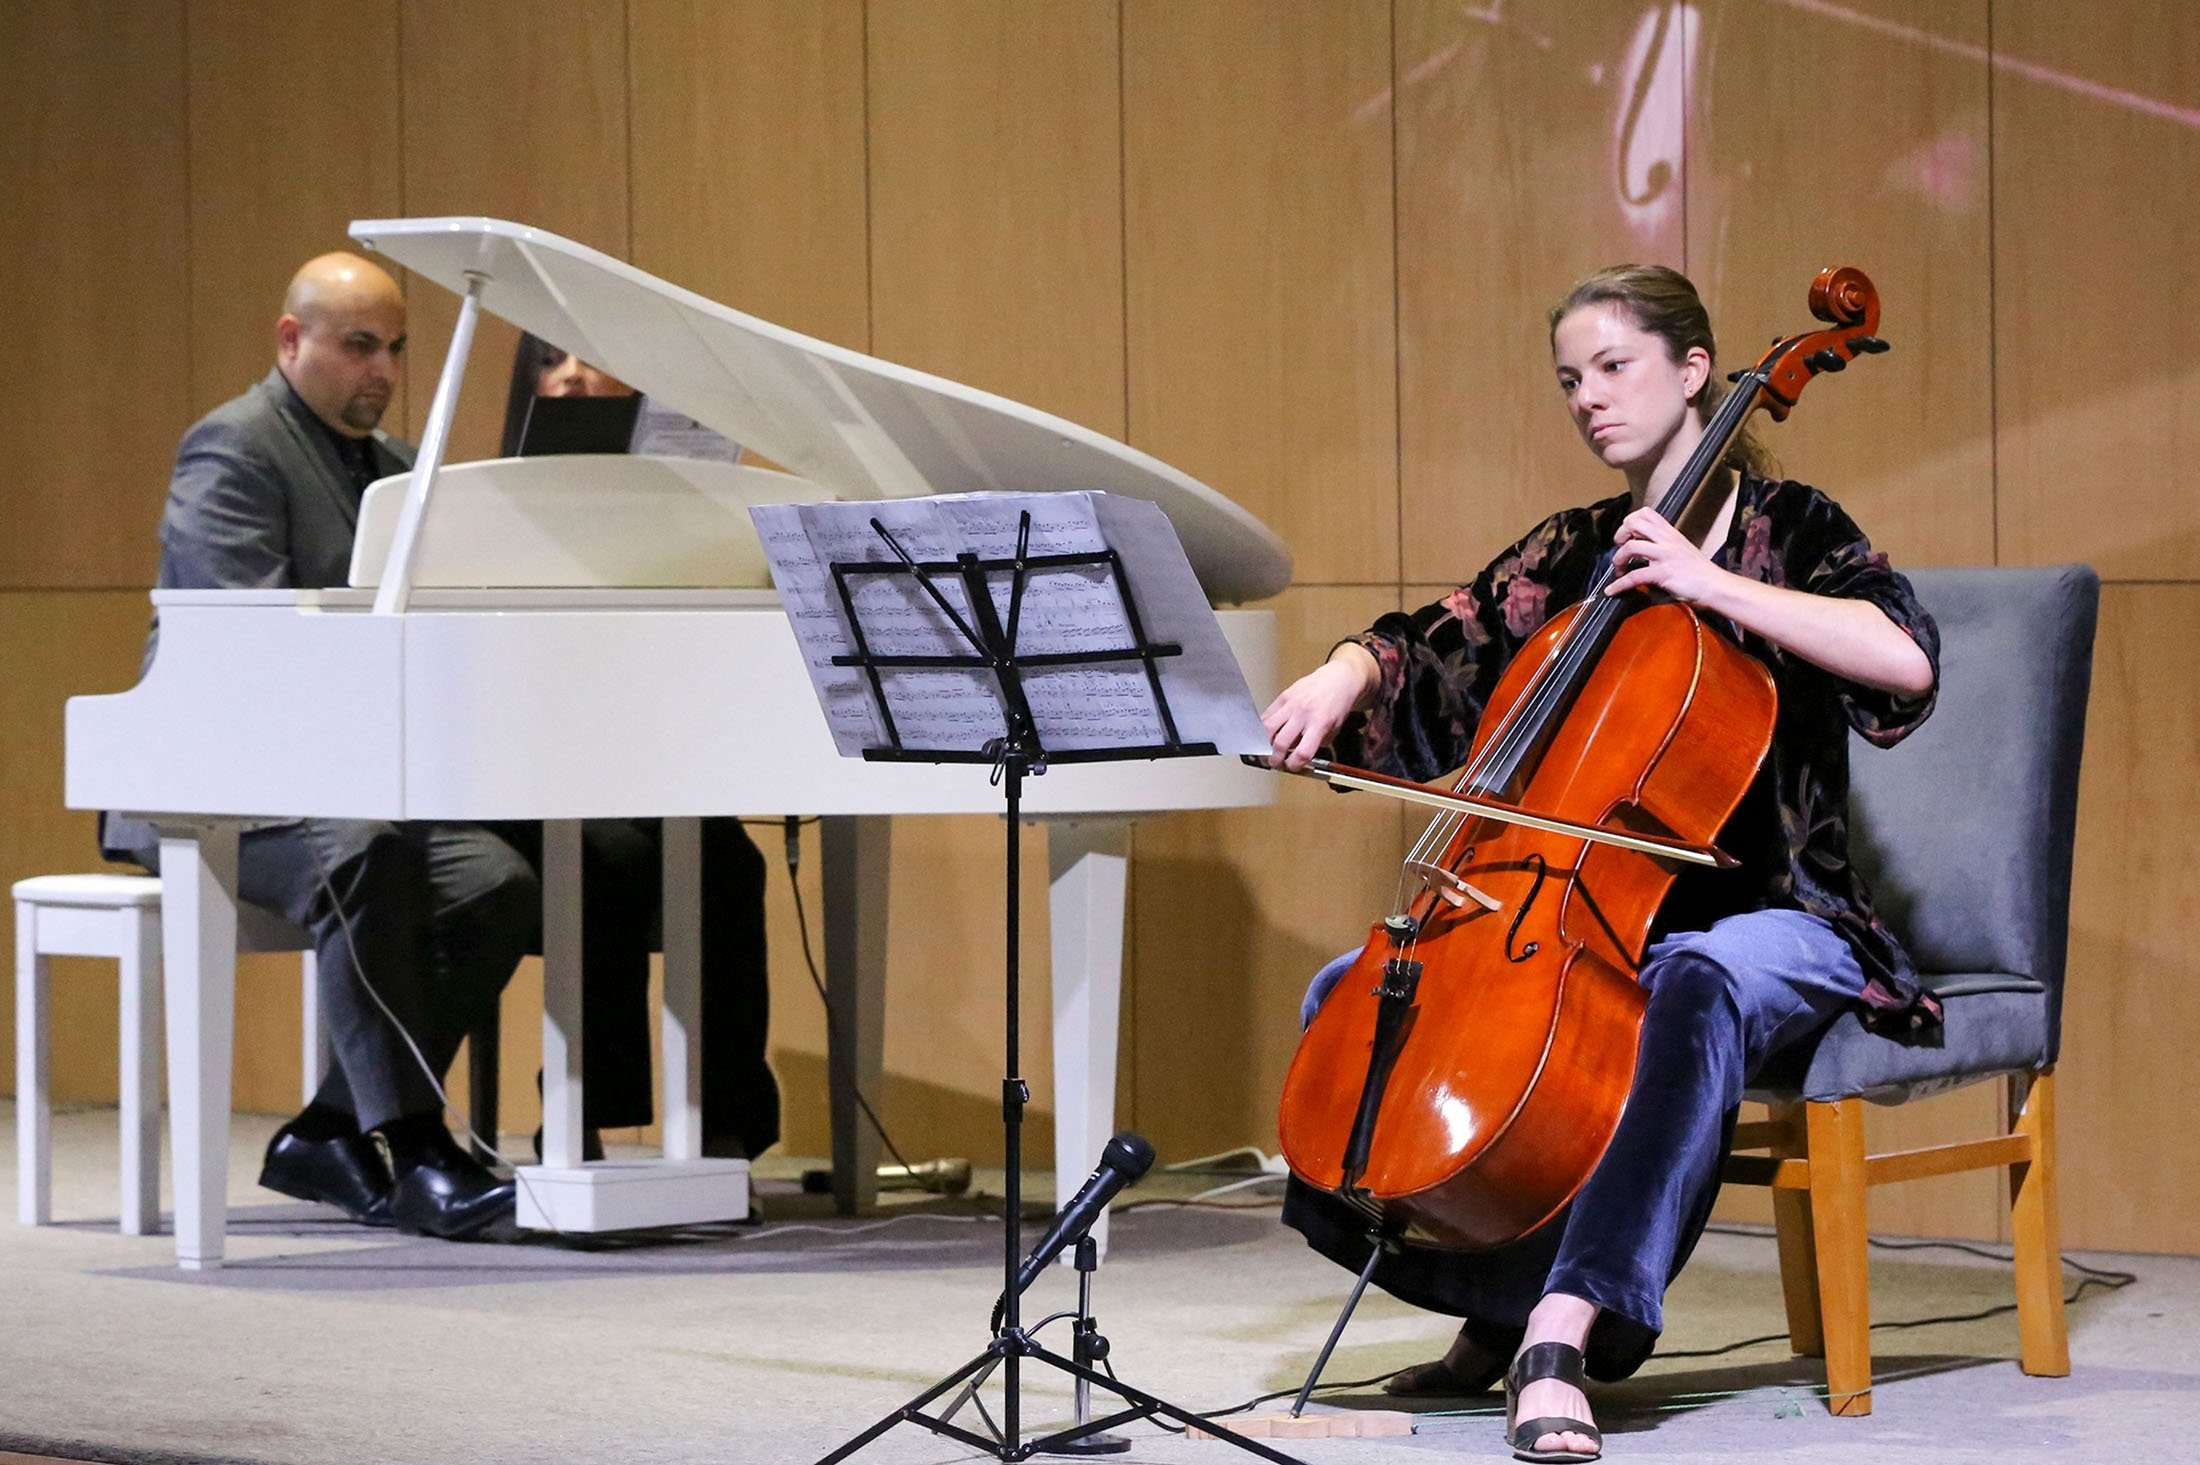 Pianist Ahmed Mahmoud (L) and Cellist Sofia Nitti perform in the capital Baghdad, Iraq, Dec. 2, 2021. (AFP Photo)